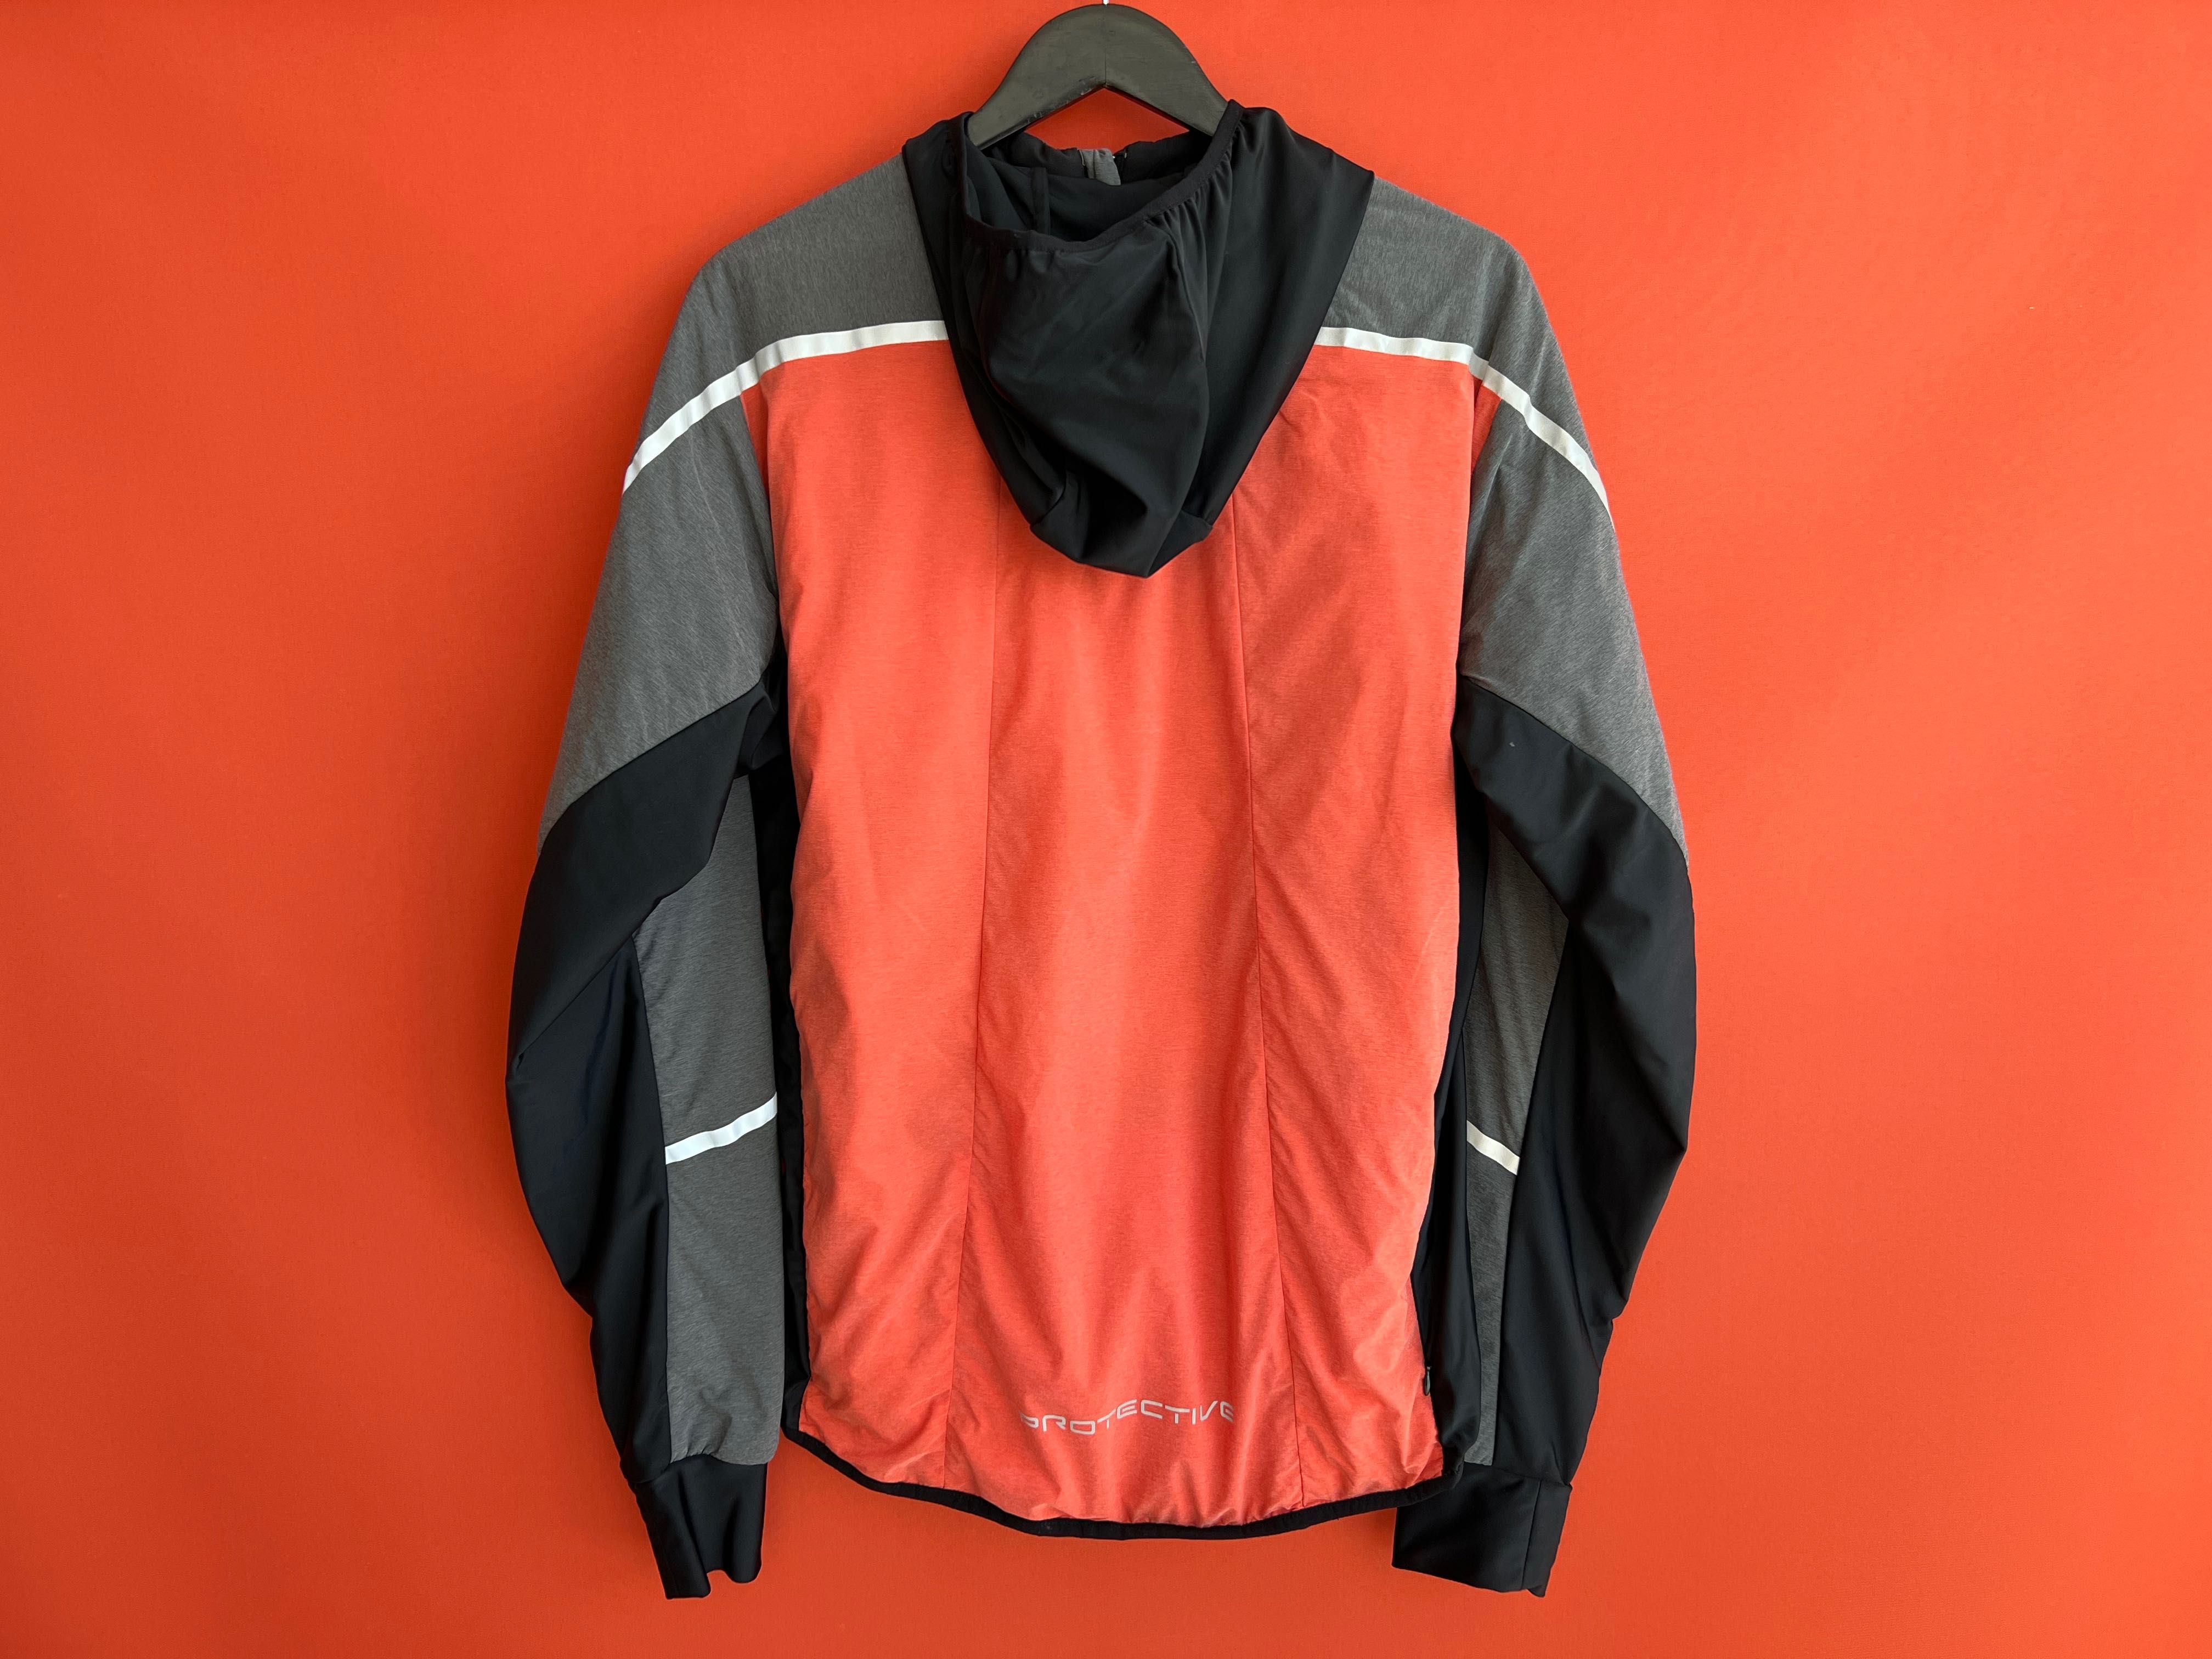 Protective мужская спортивная вело куртка для бега размер XL Б У